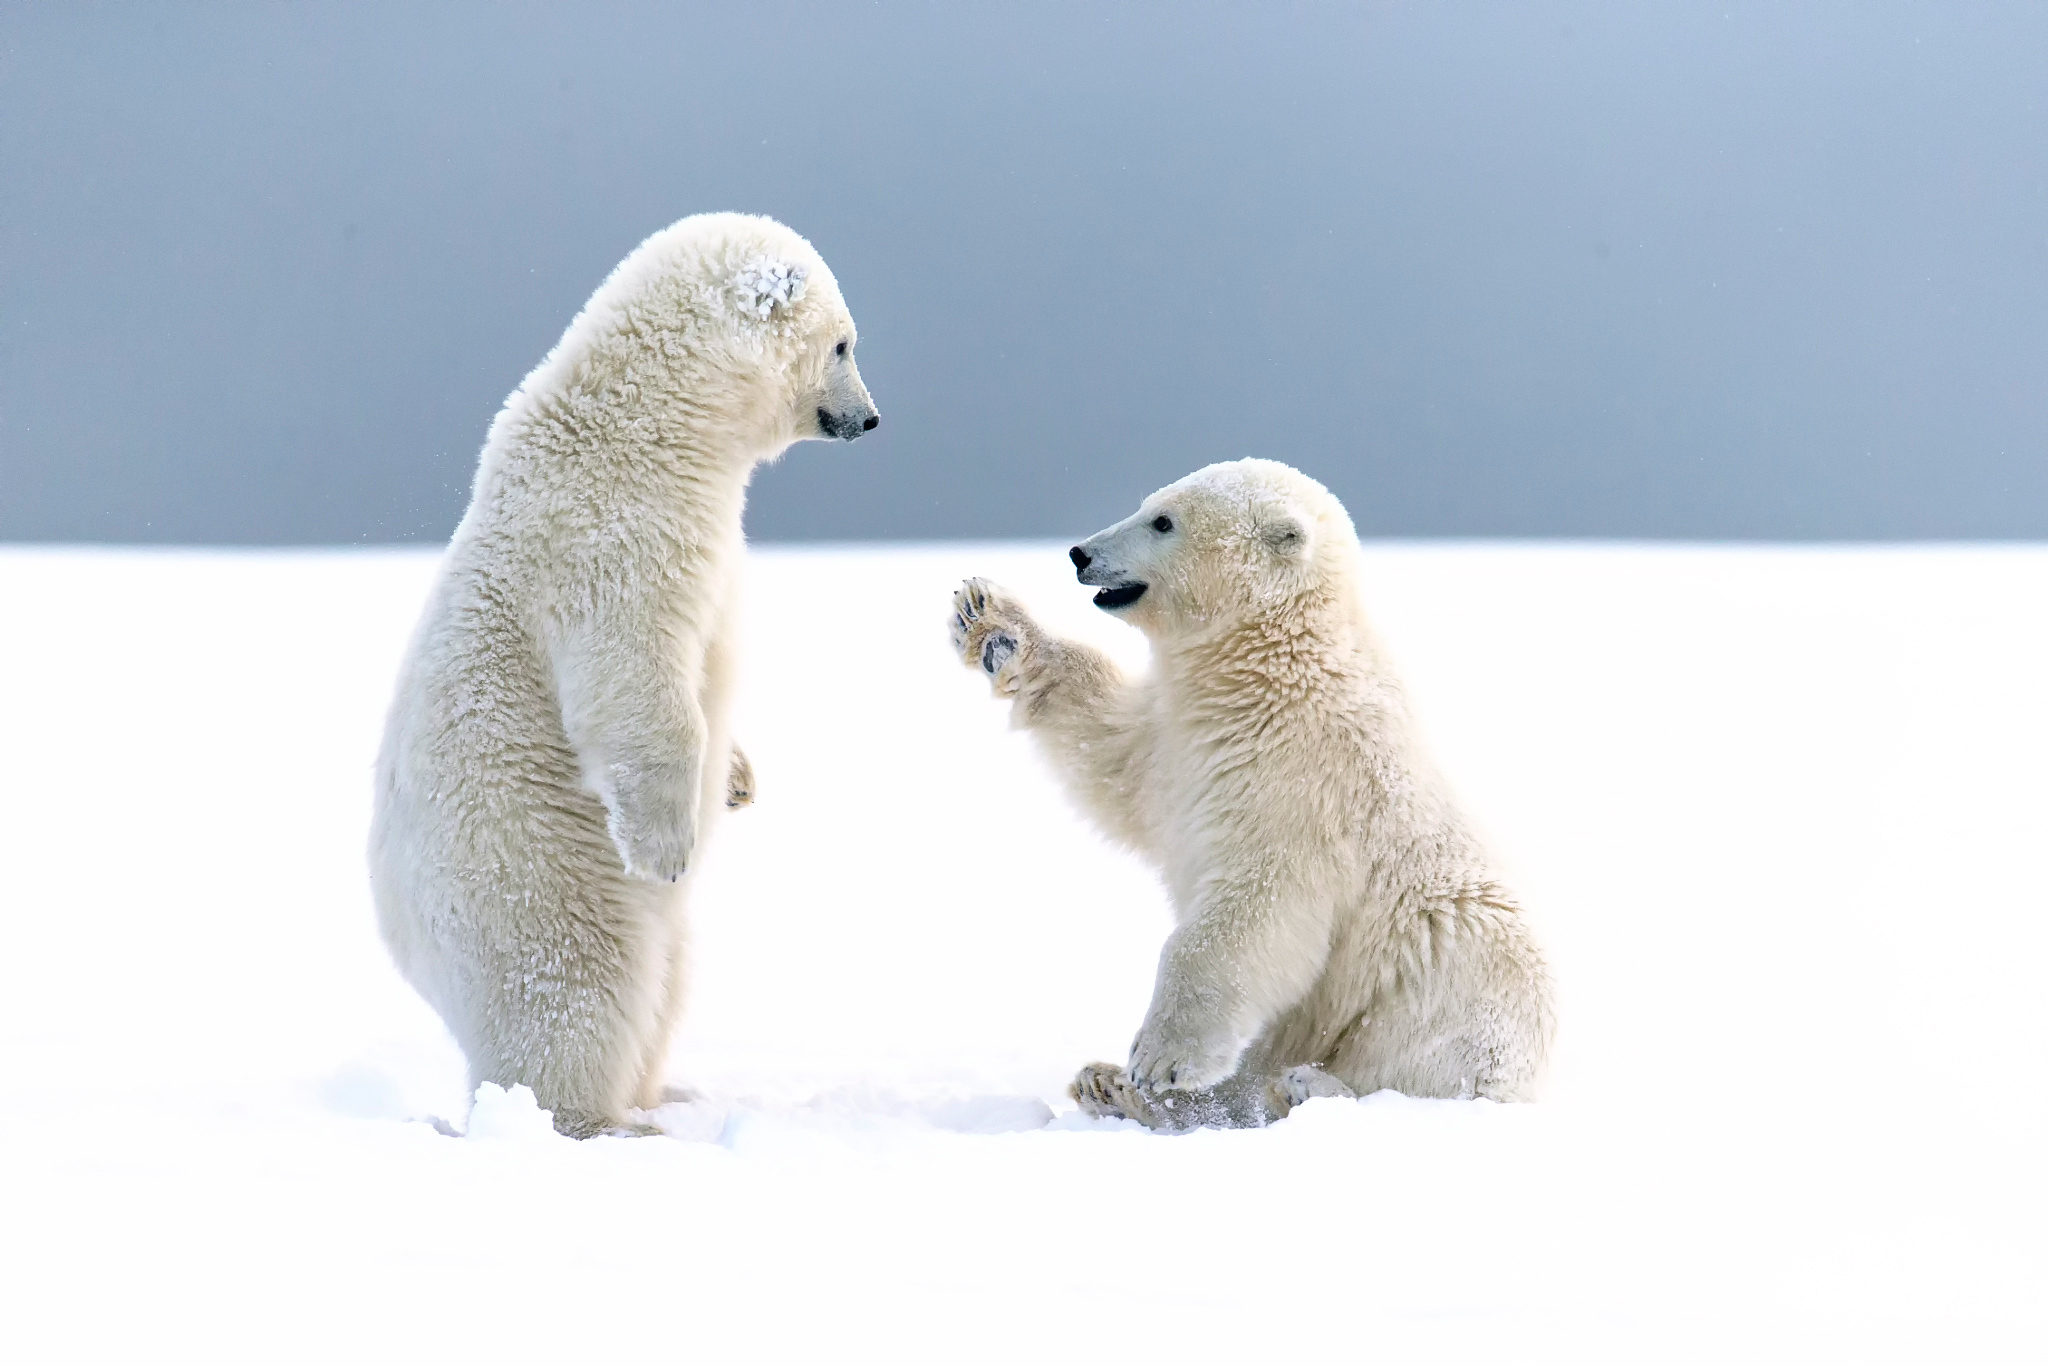 orso polare wallpaper hd,orso polare,orso,orso polare,artico,animale terrestre